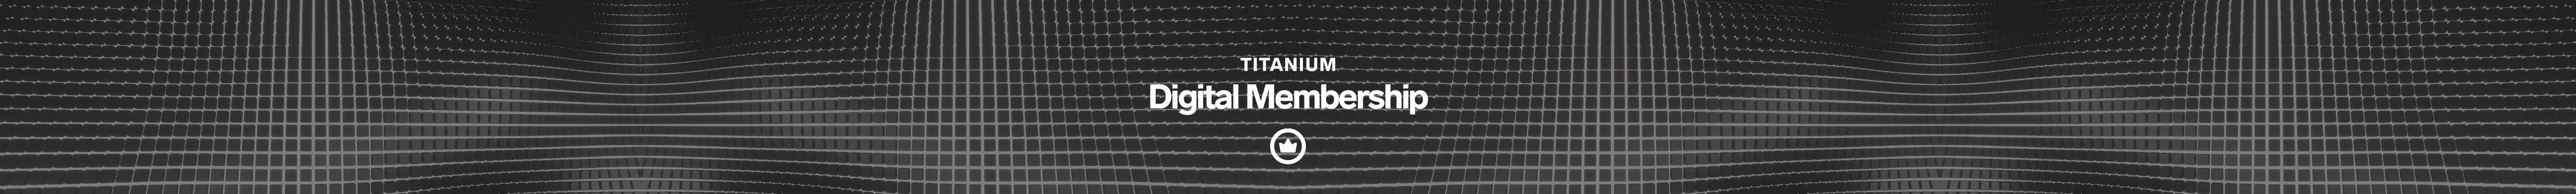 Titanium Digital Membership